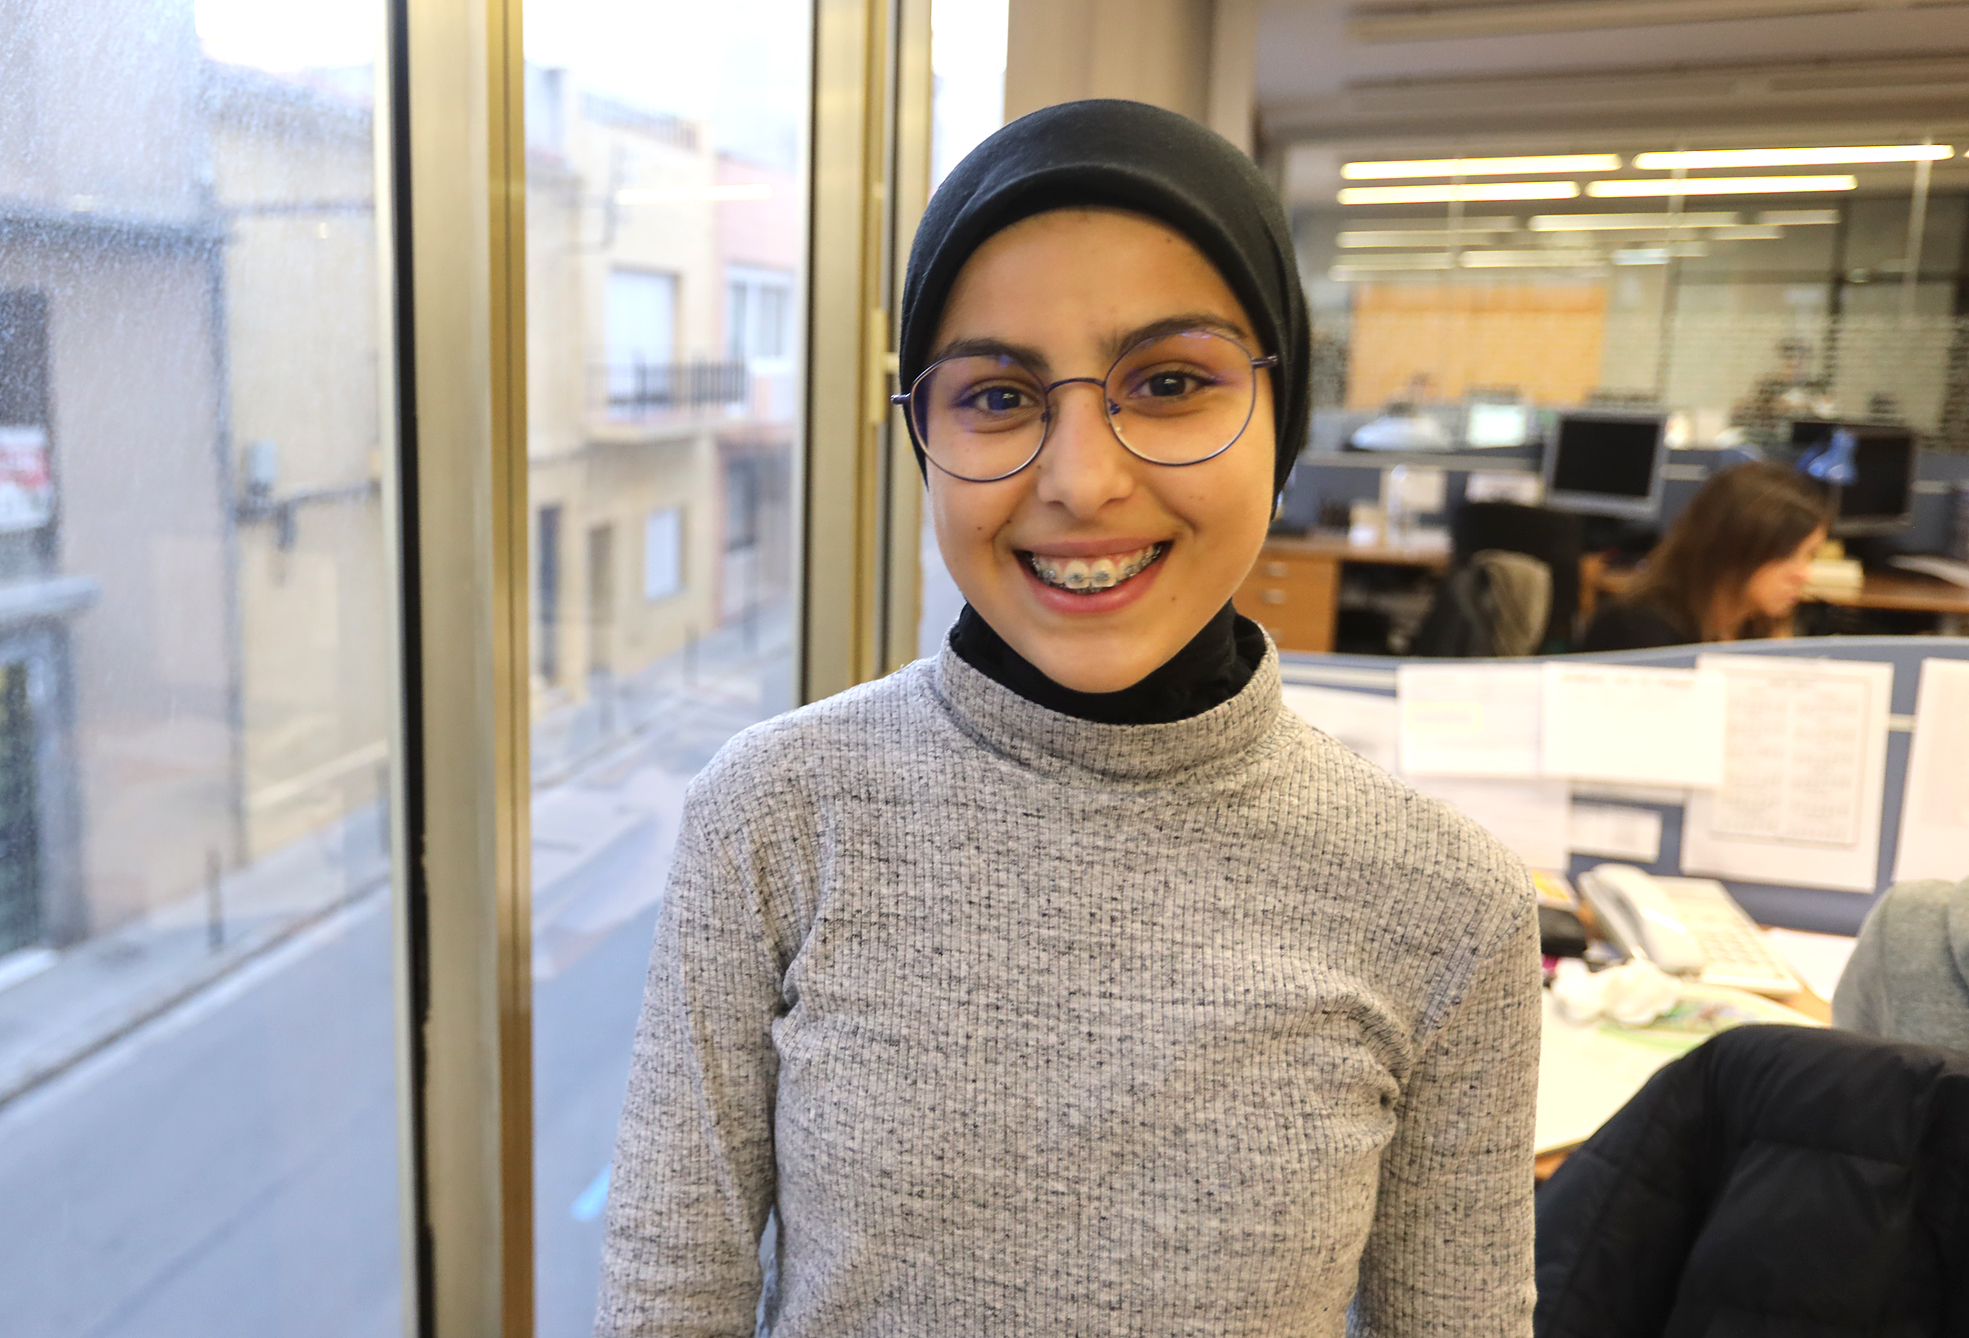 Zainab Tamara, garriguenca de Granollers, estudiant de Criminologia